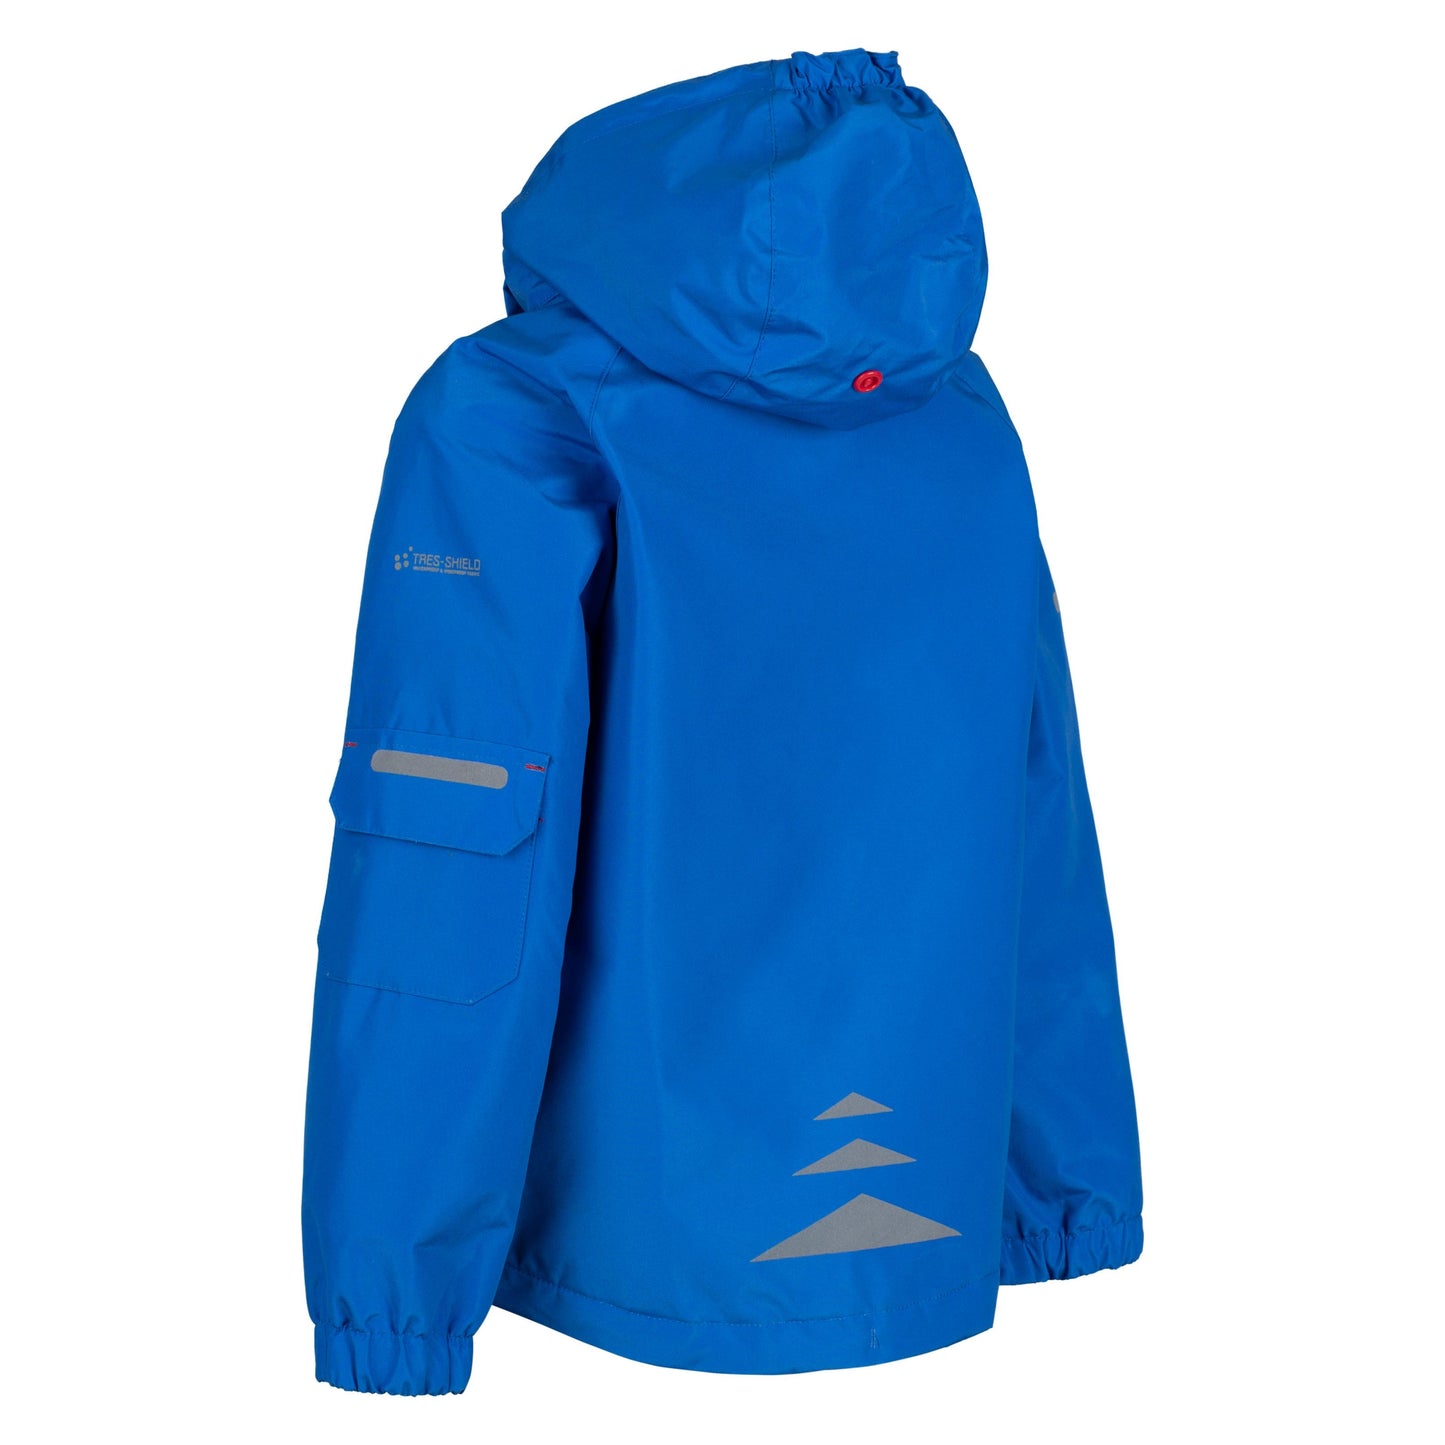 Desic Unisex Kids Waterproof Jacket in Blue